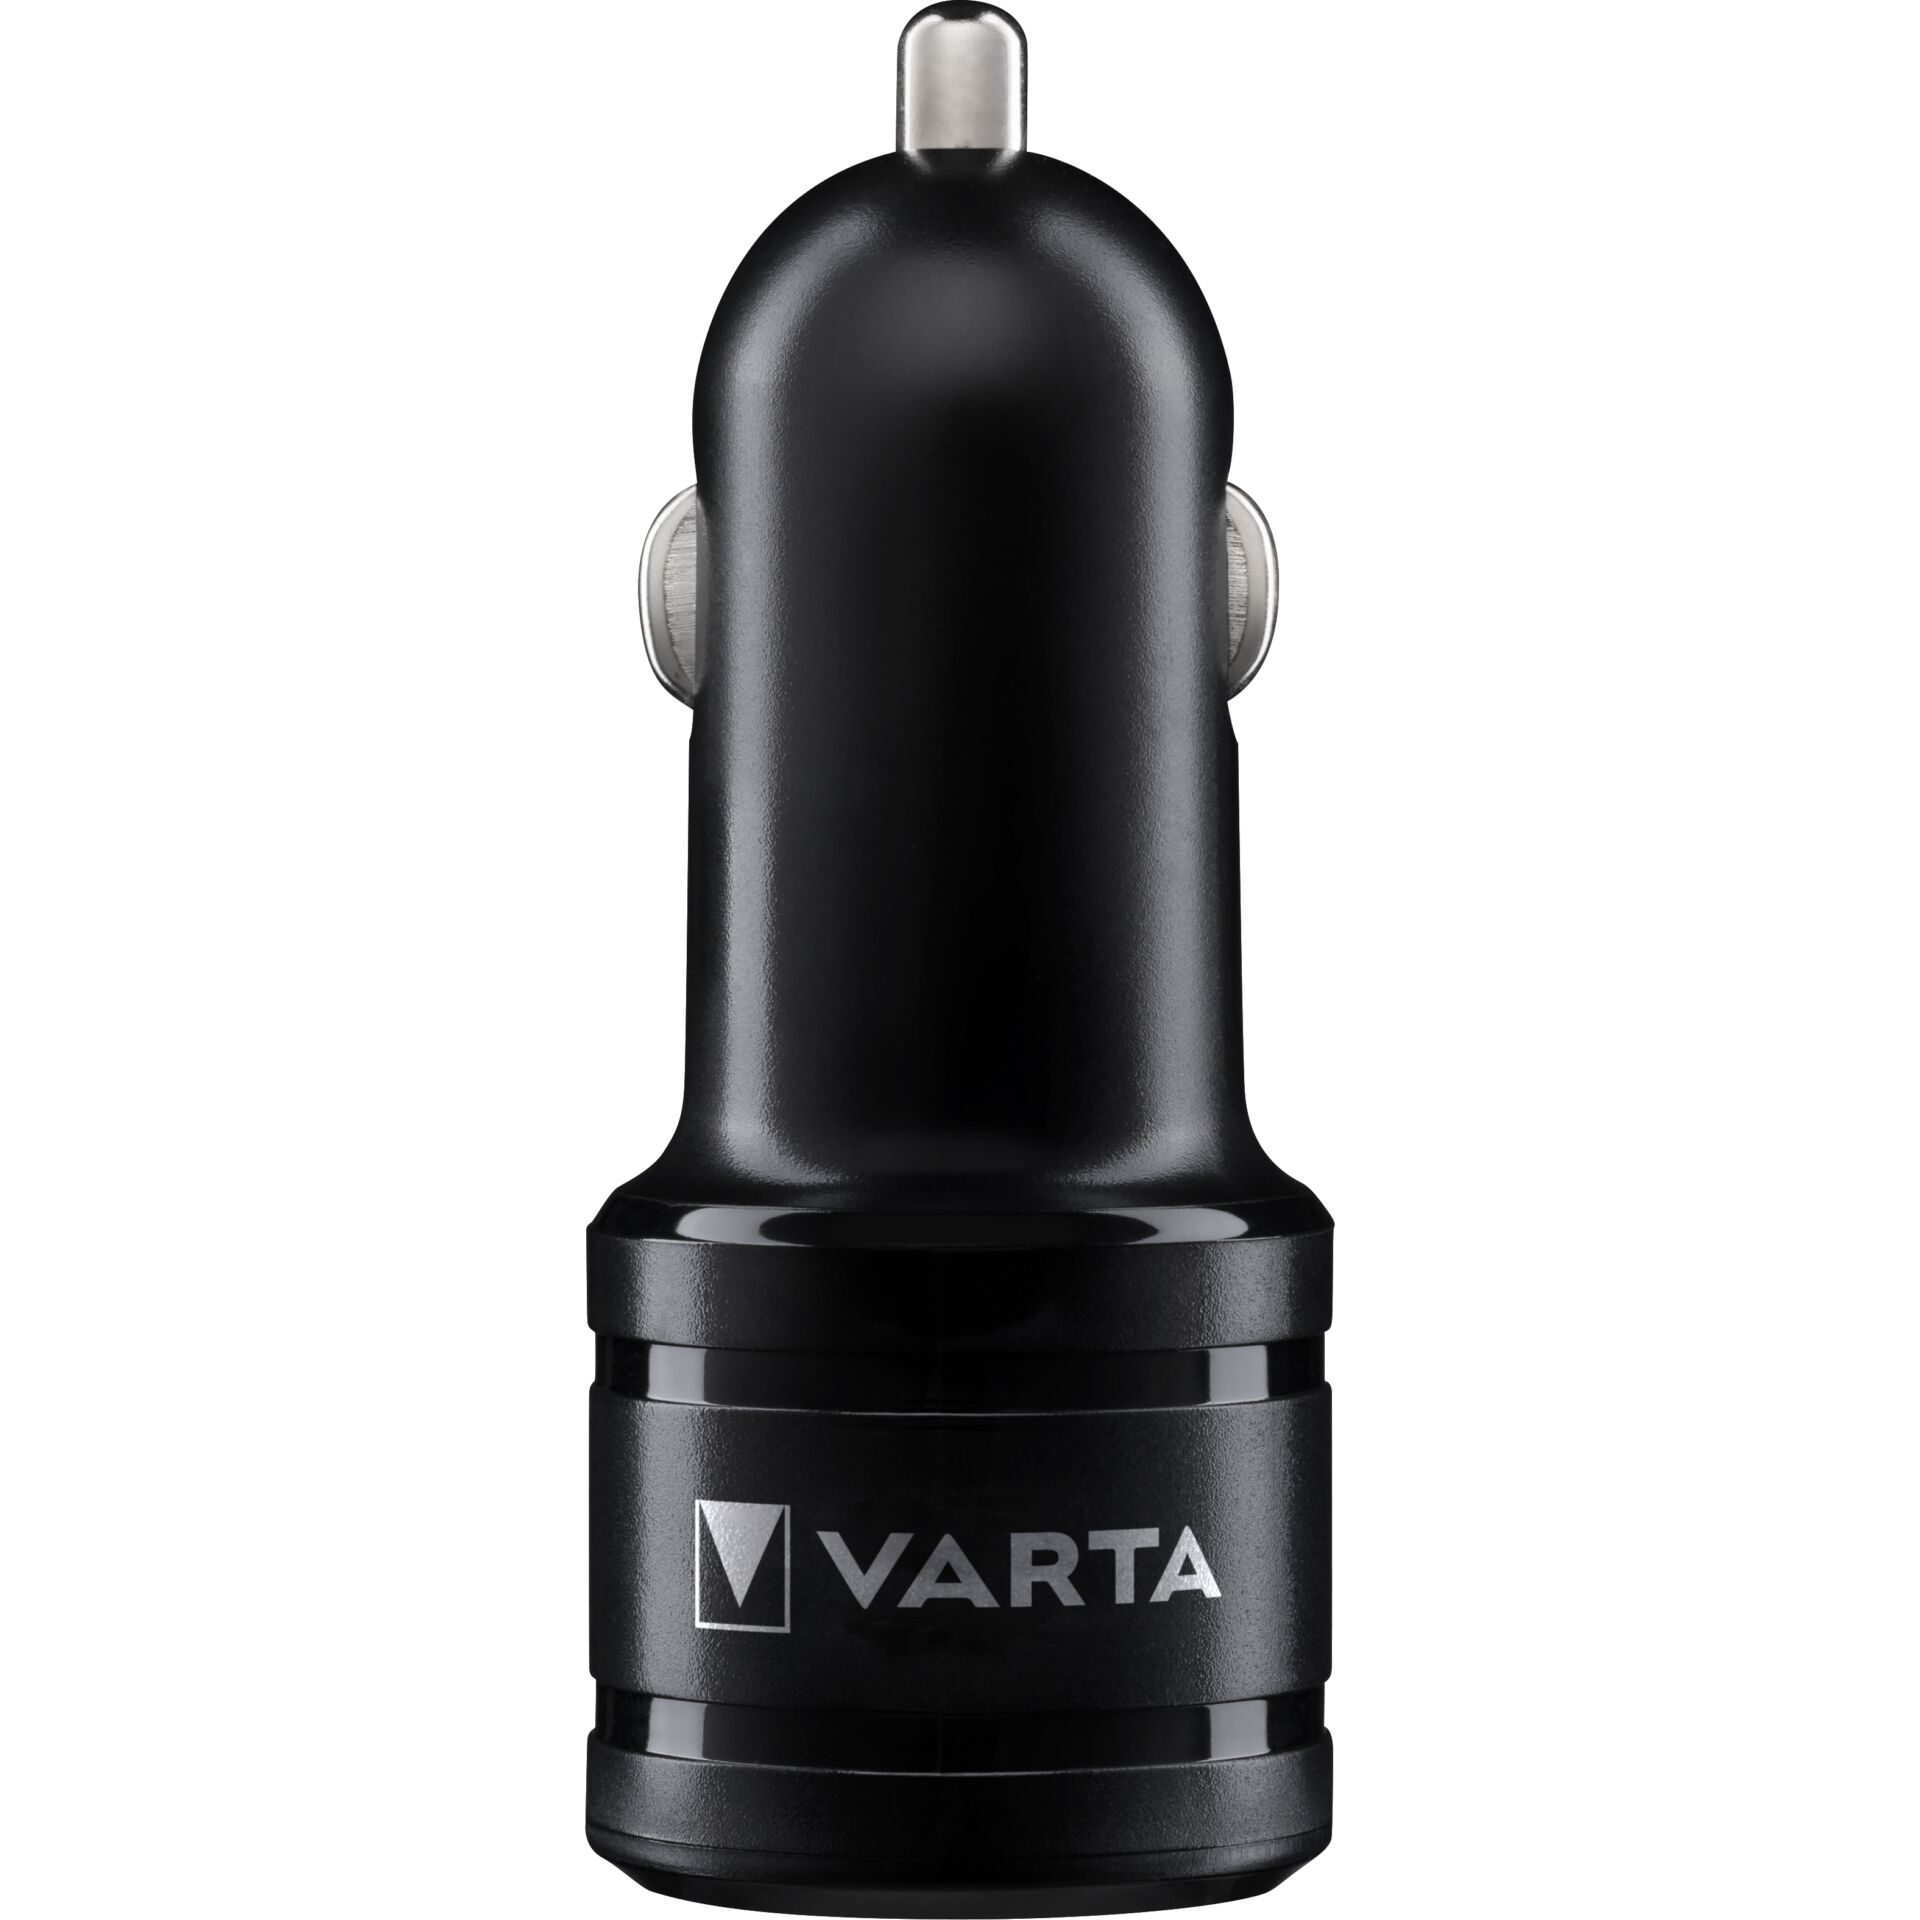 Varta Car Charger Dual USB Fast Type C PD & USB A